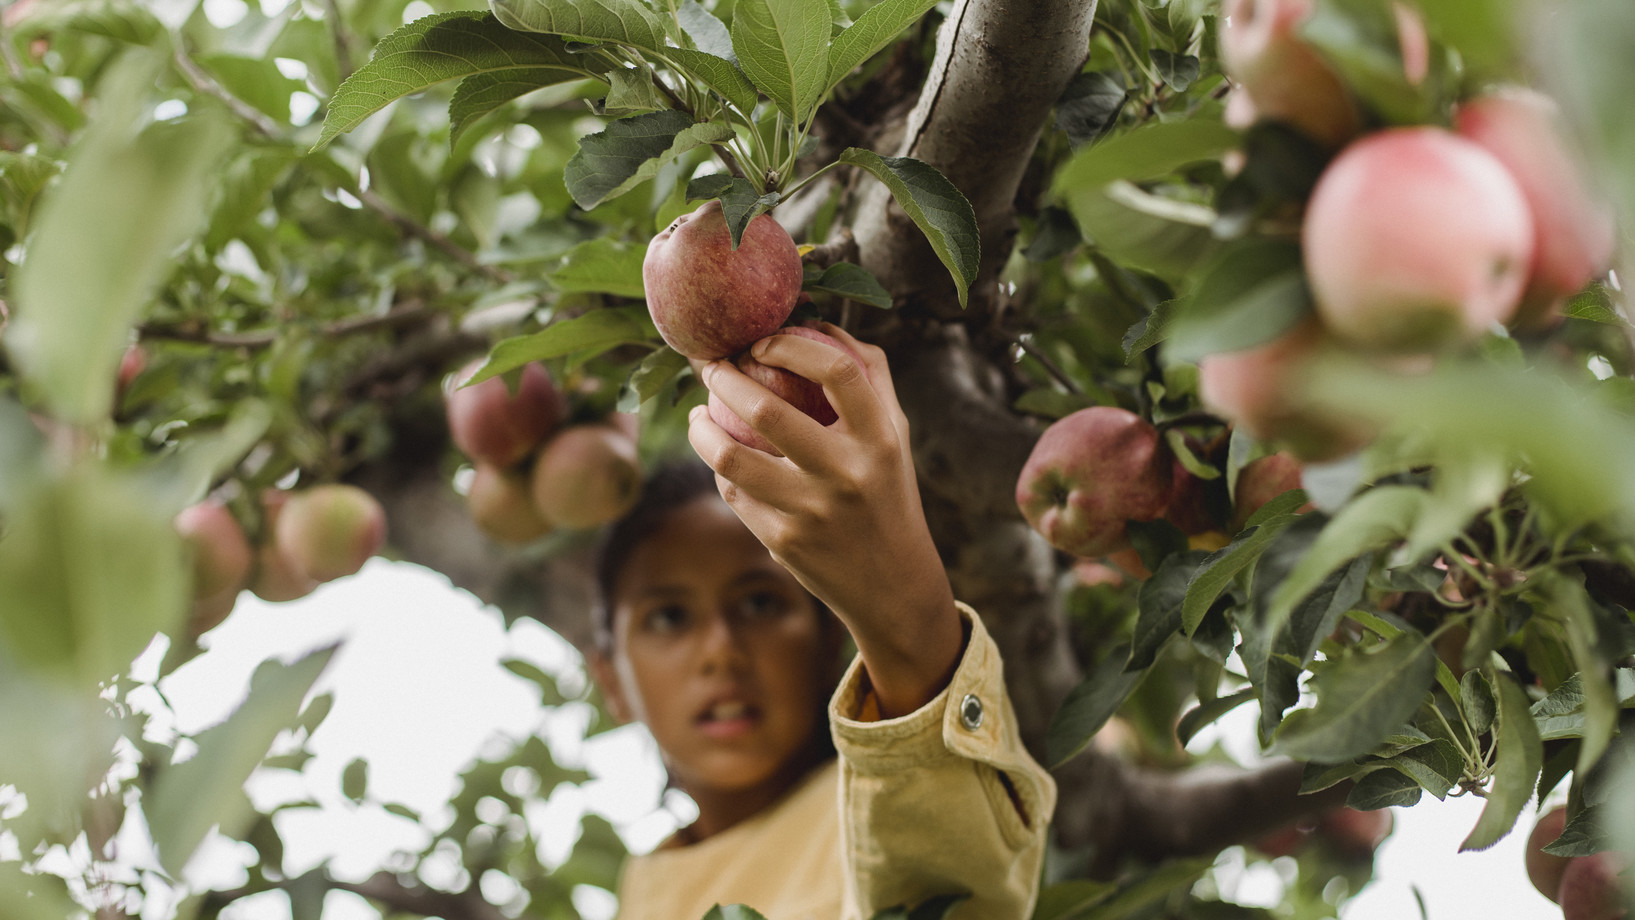 Ethnic teen girl climbed on tree harvesting fruits